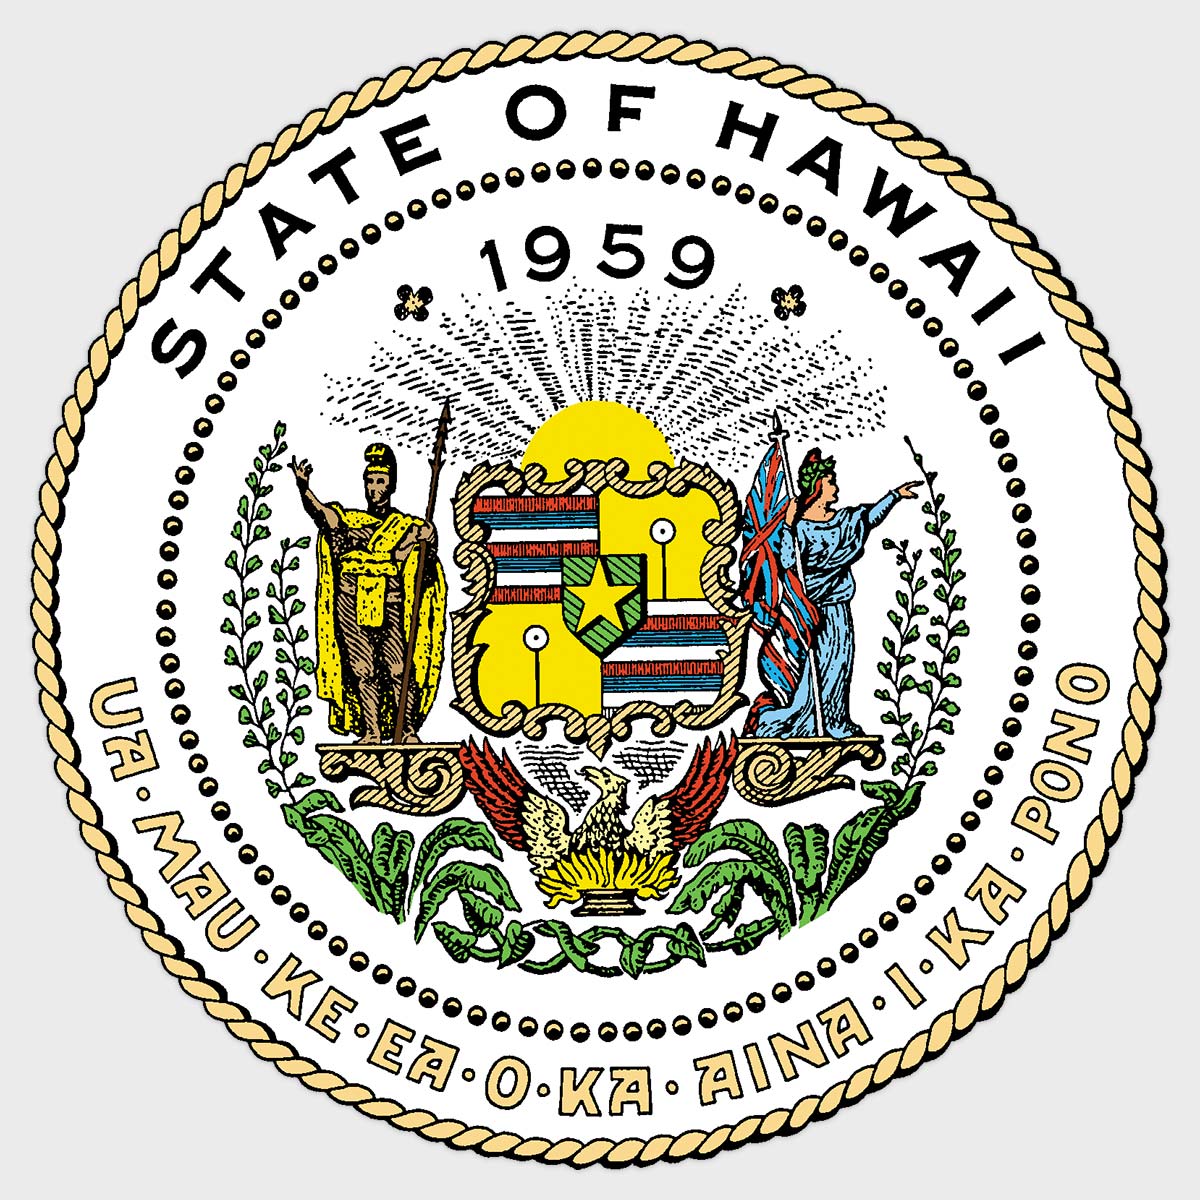 hawaii conveyance tax on leases